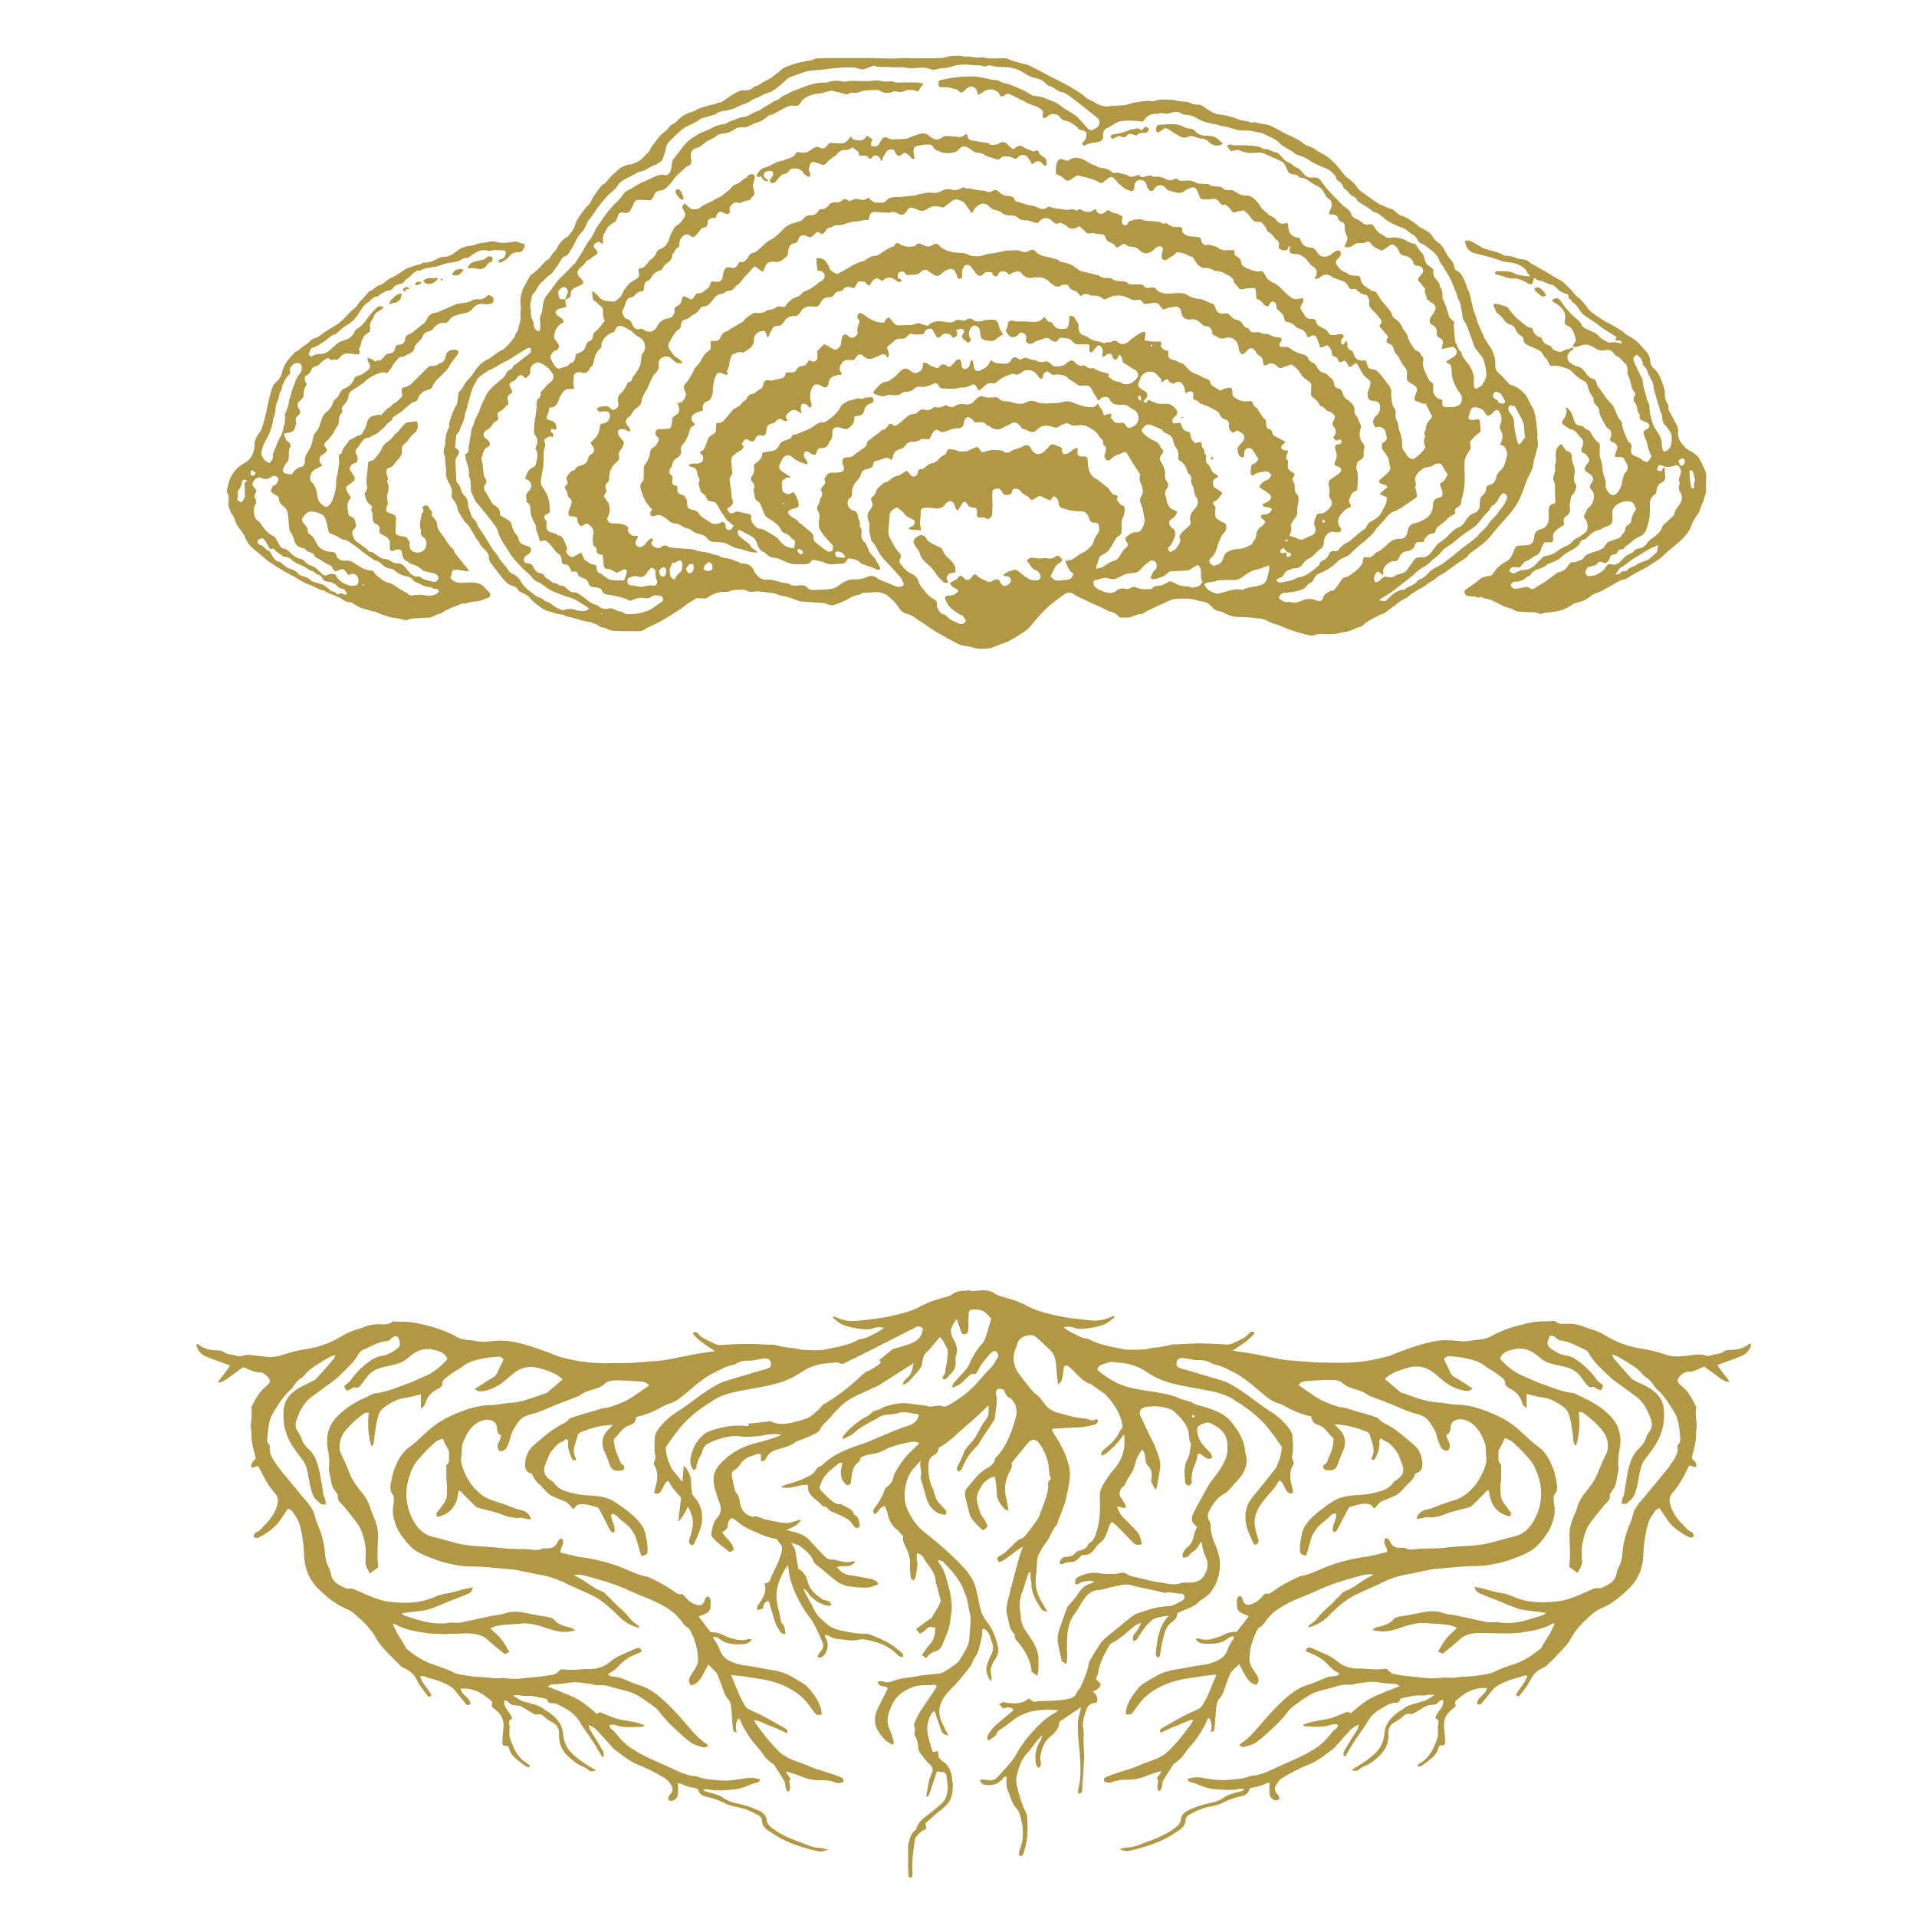 The Shroomy Temple  Wild Reishi Mushroom Tincture – Black Magic Alchemy